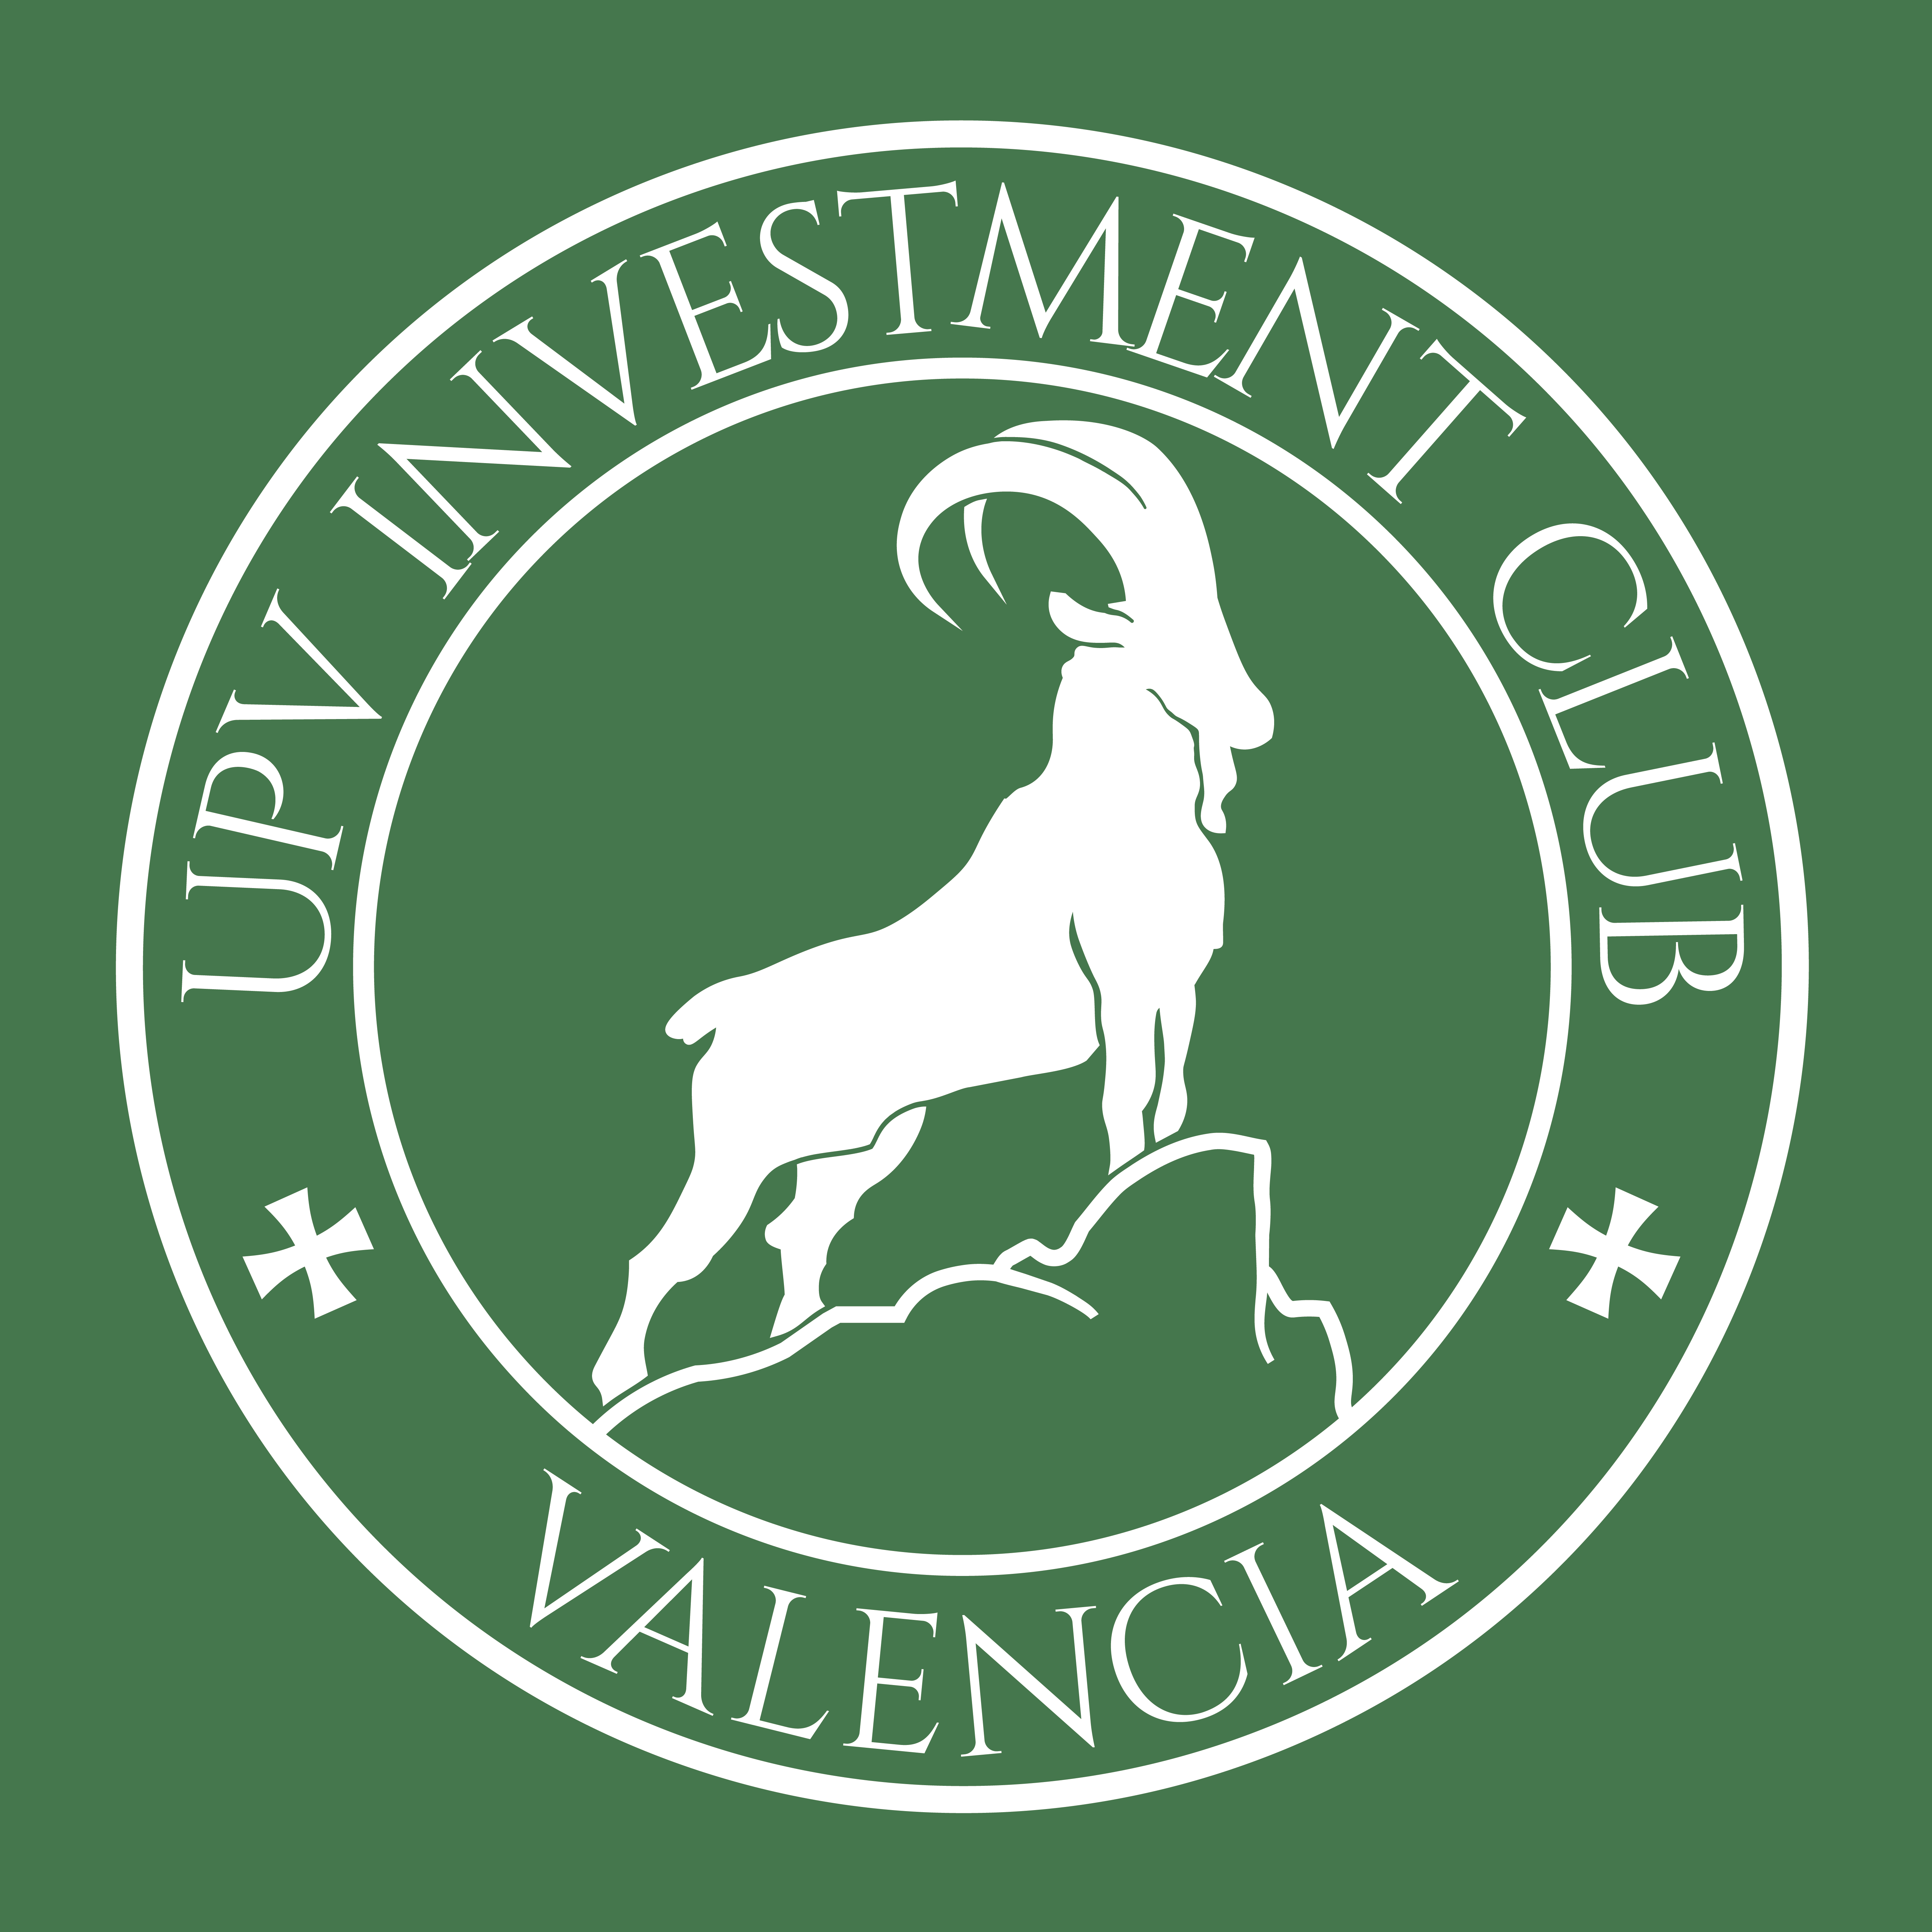 UPV Investment Club